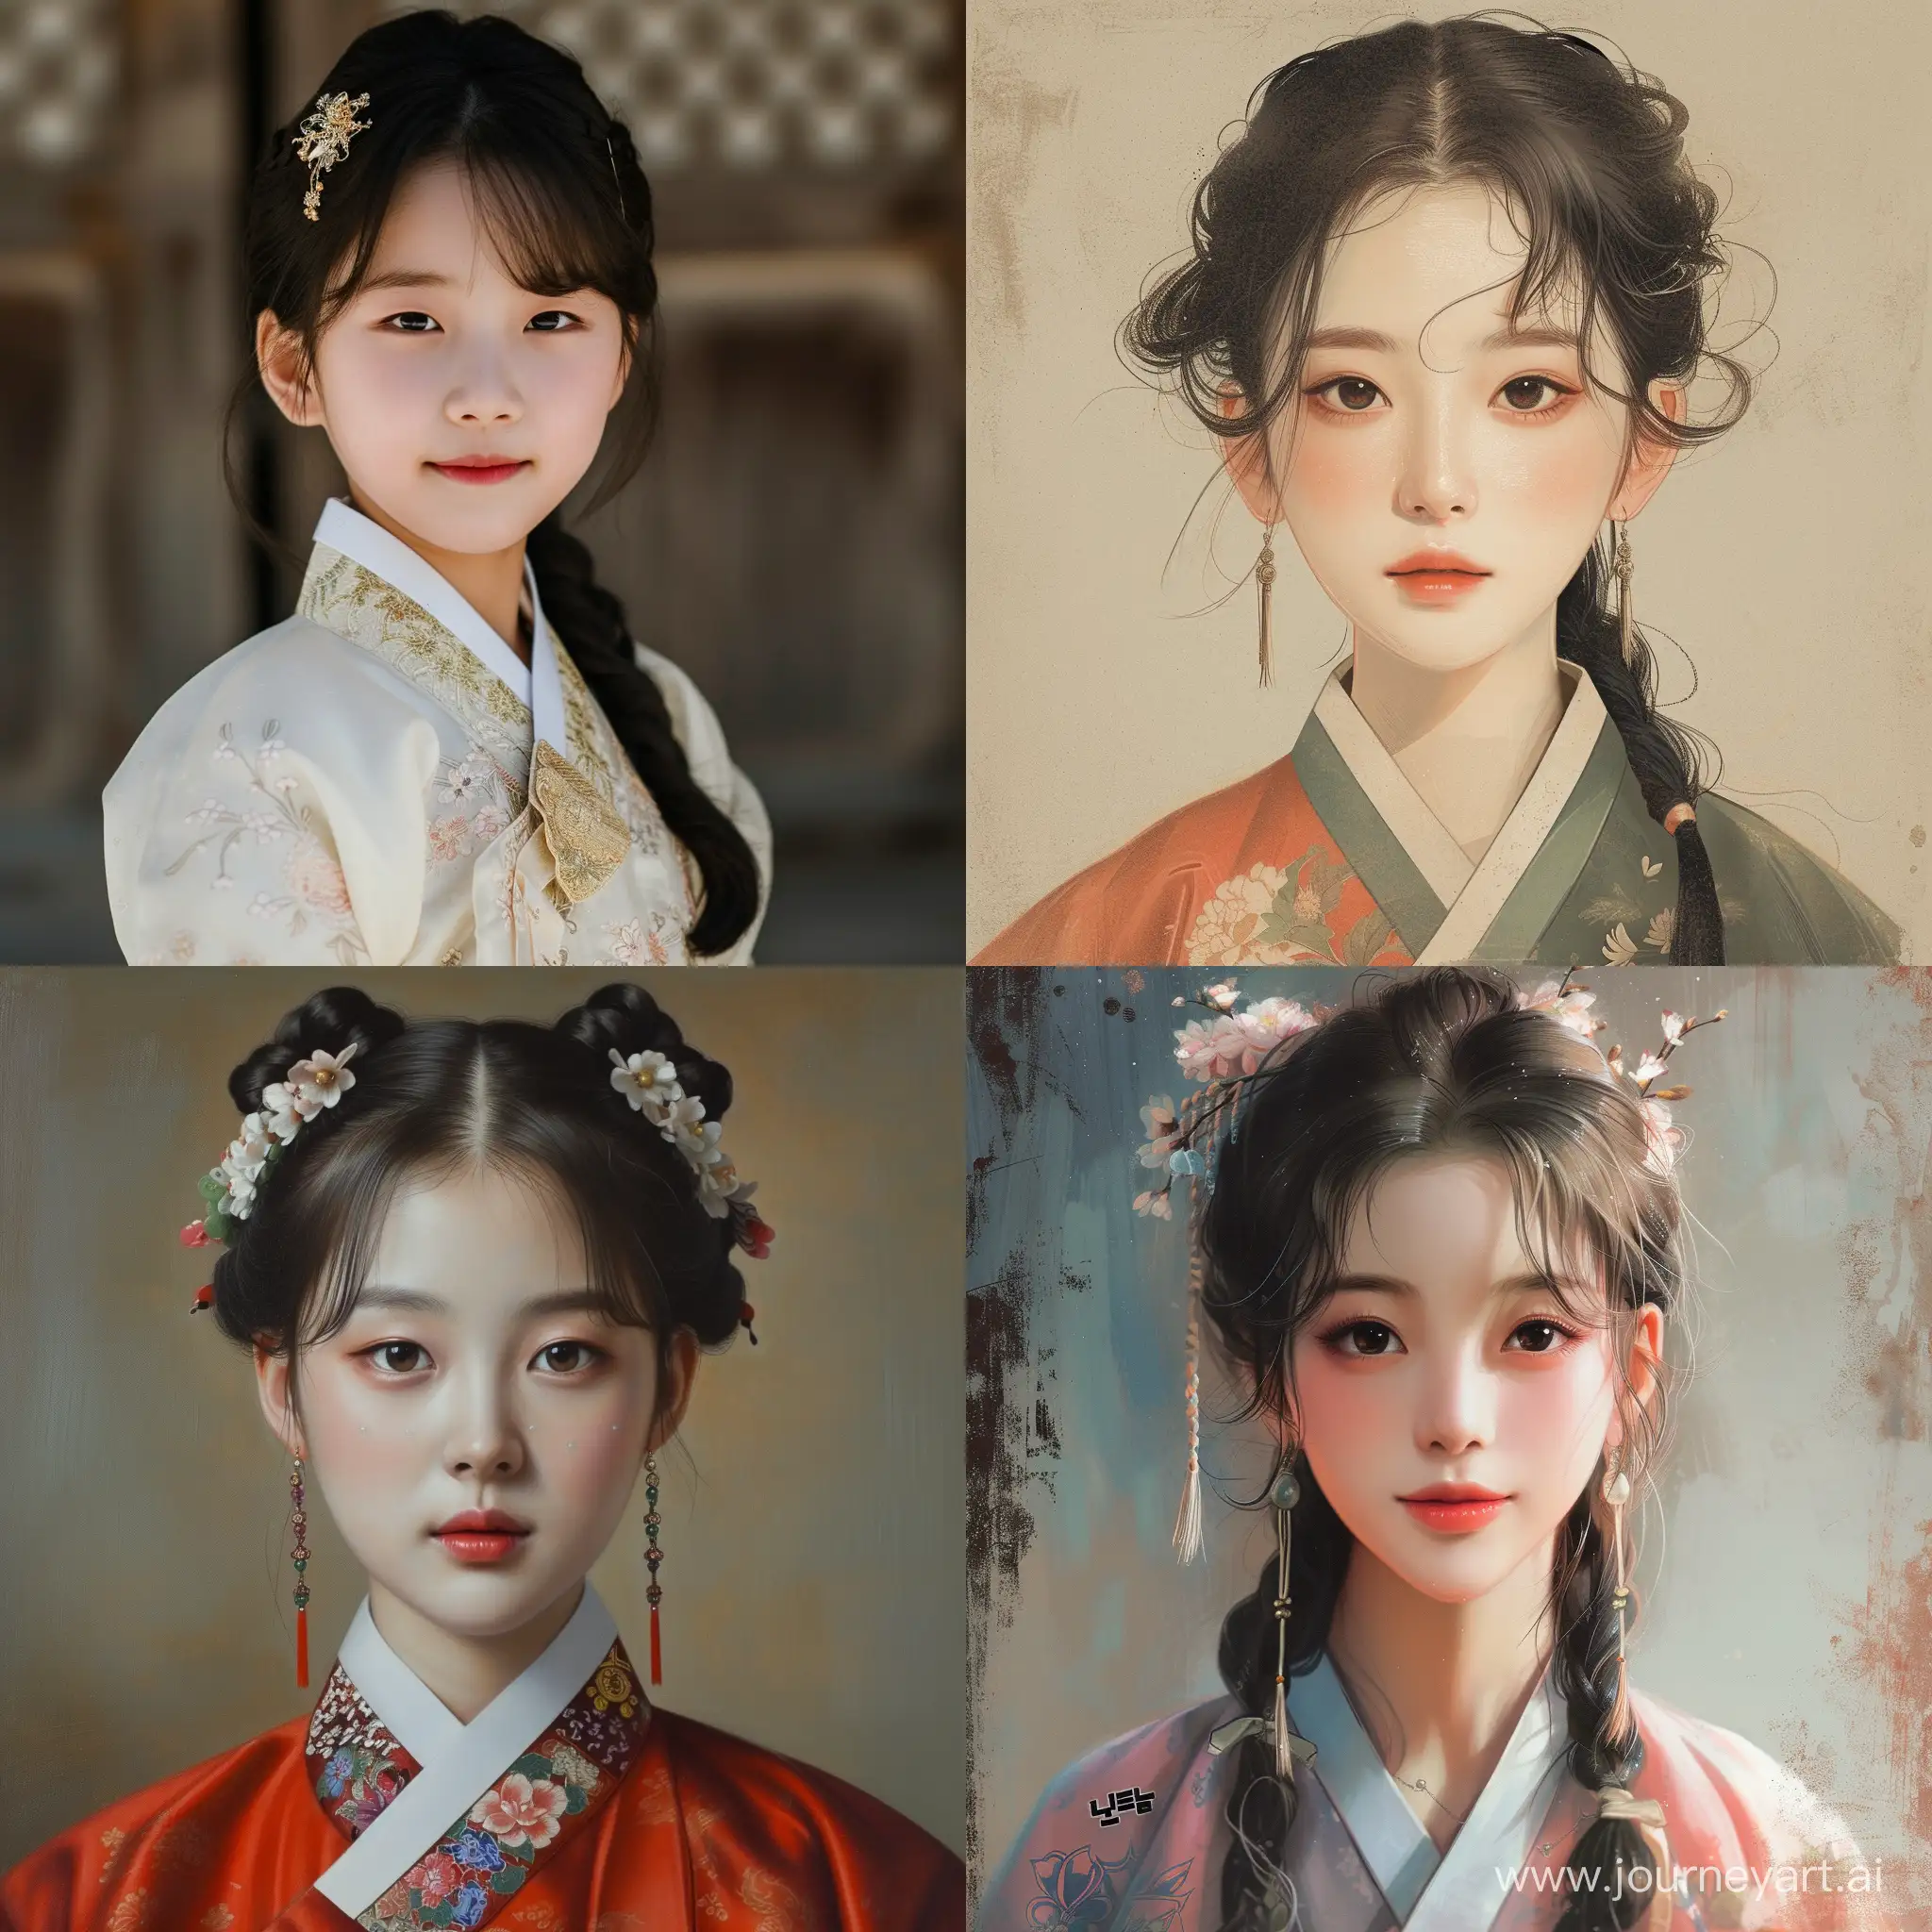 Charming-Korean-Girl-in-Traditional-Attire-Vibrant-Portrait